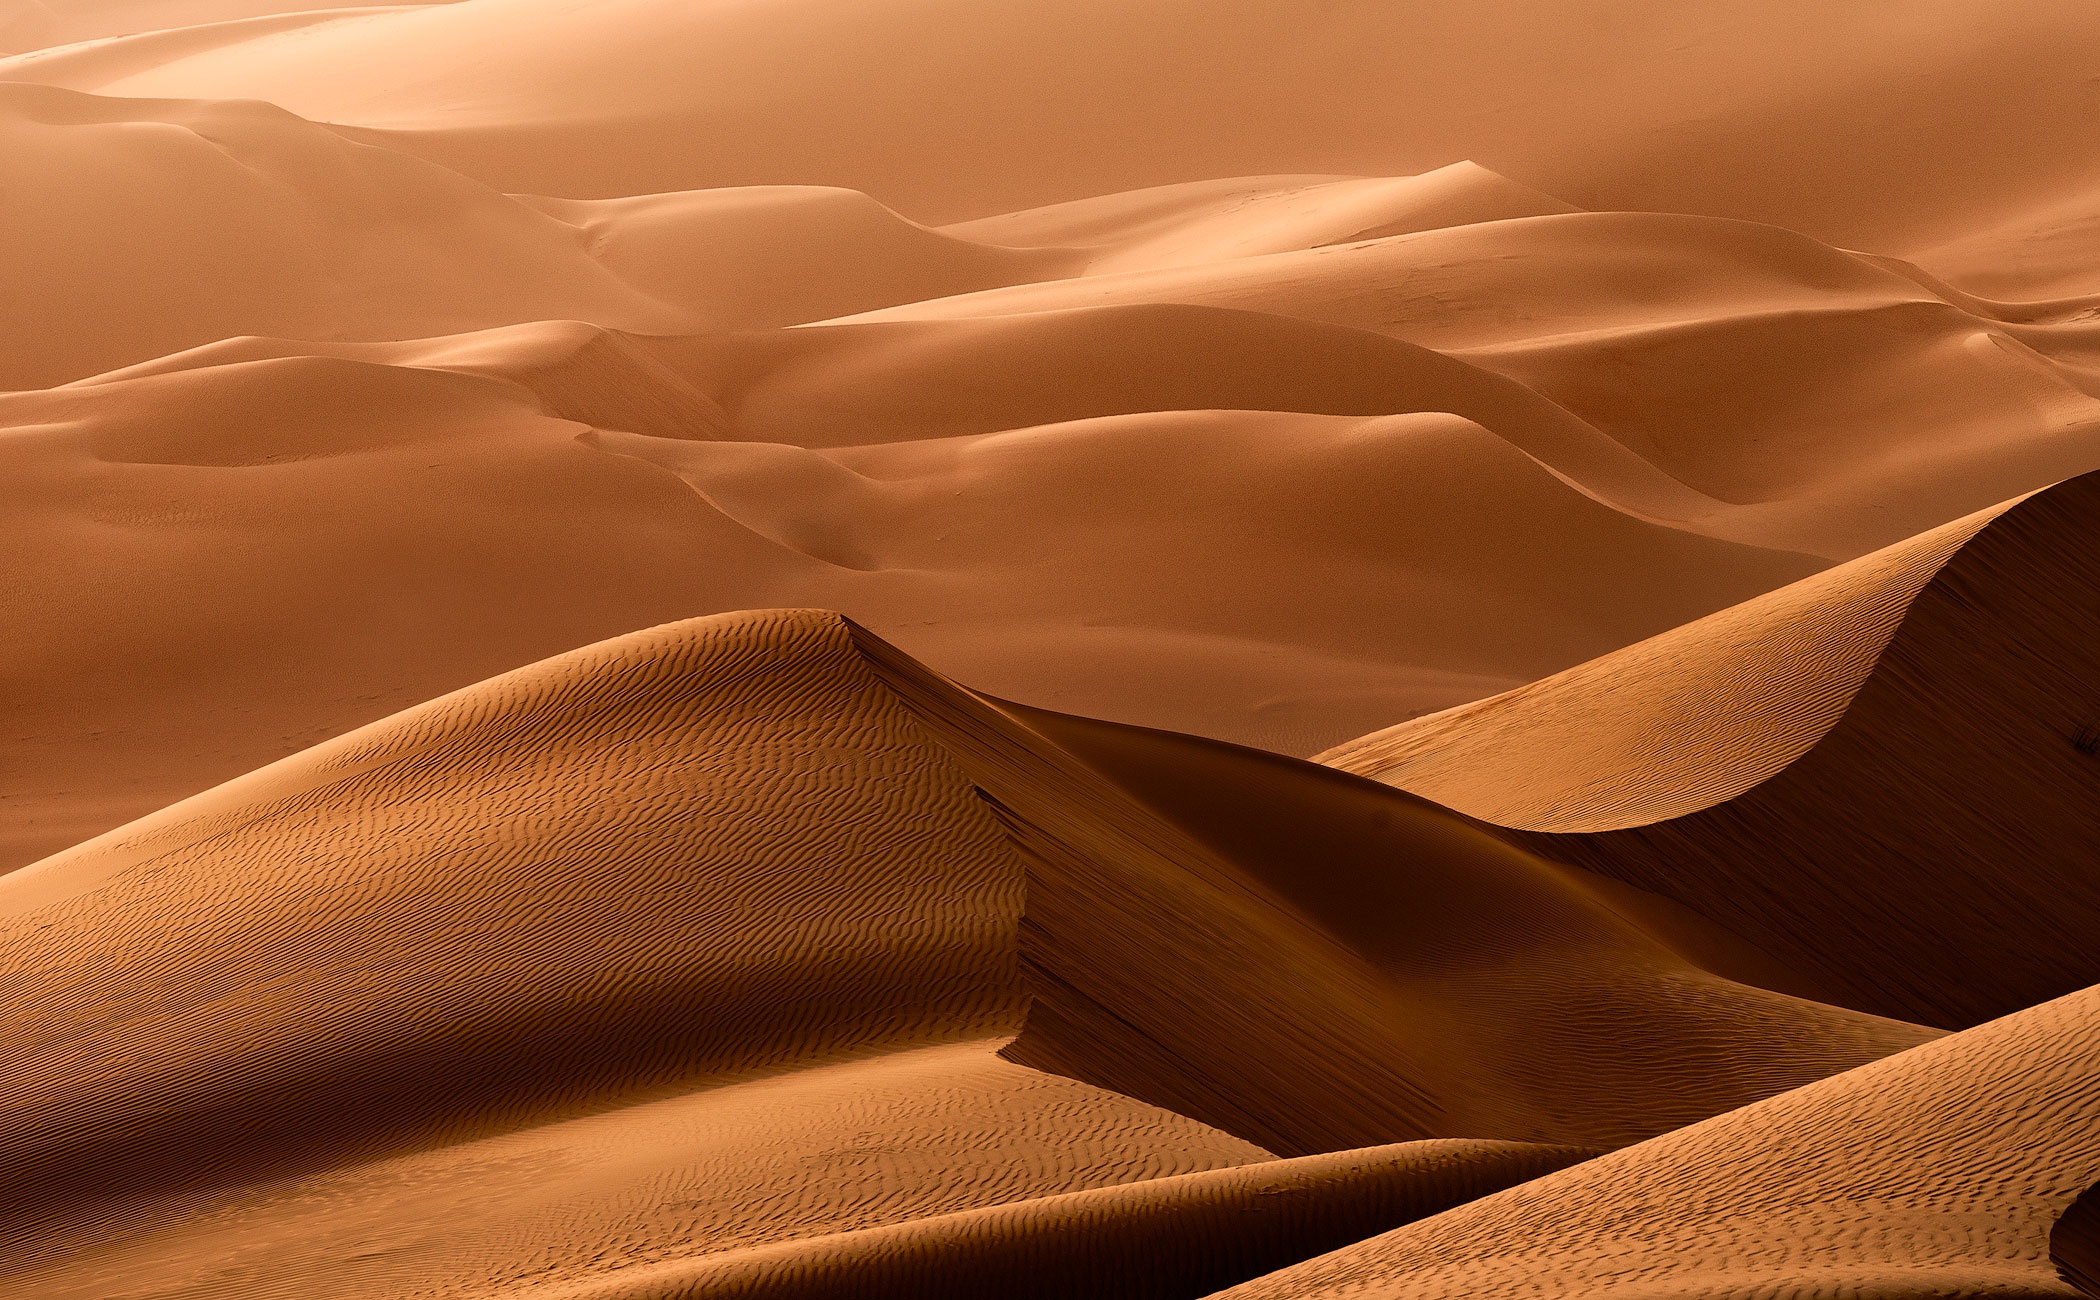 Desert Wallpaper 4k Landscape Windows 11 Nature 8616 Images